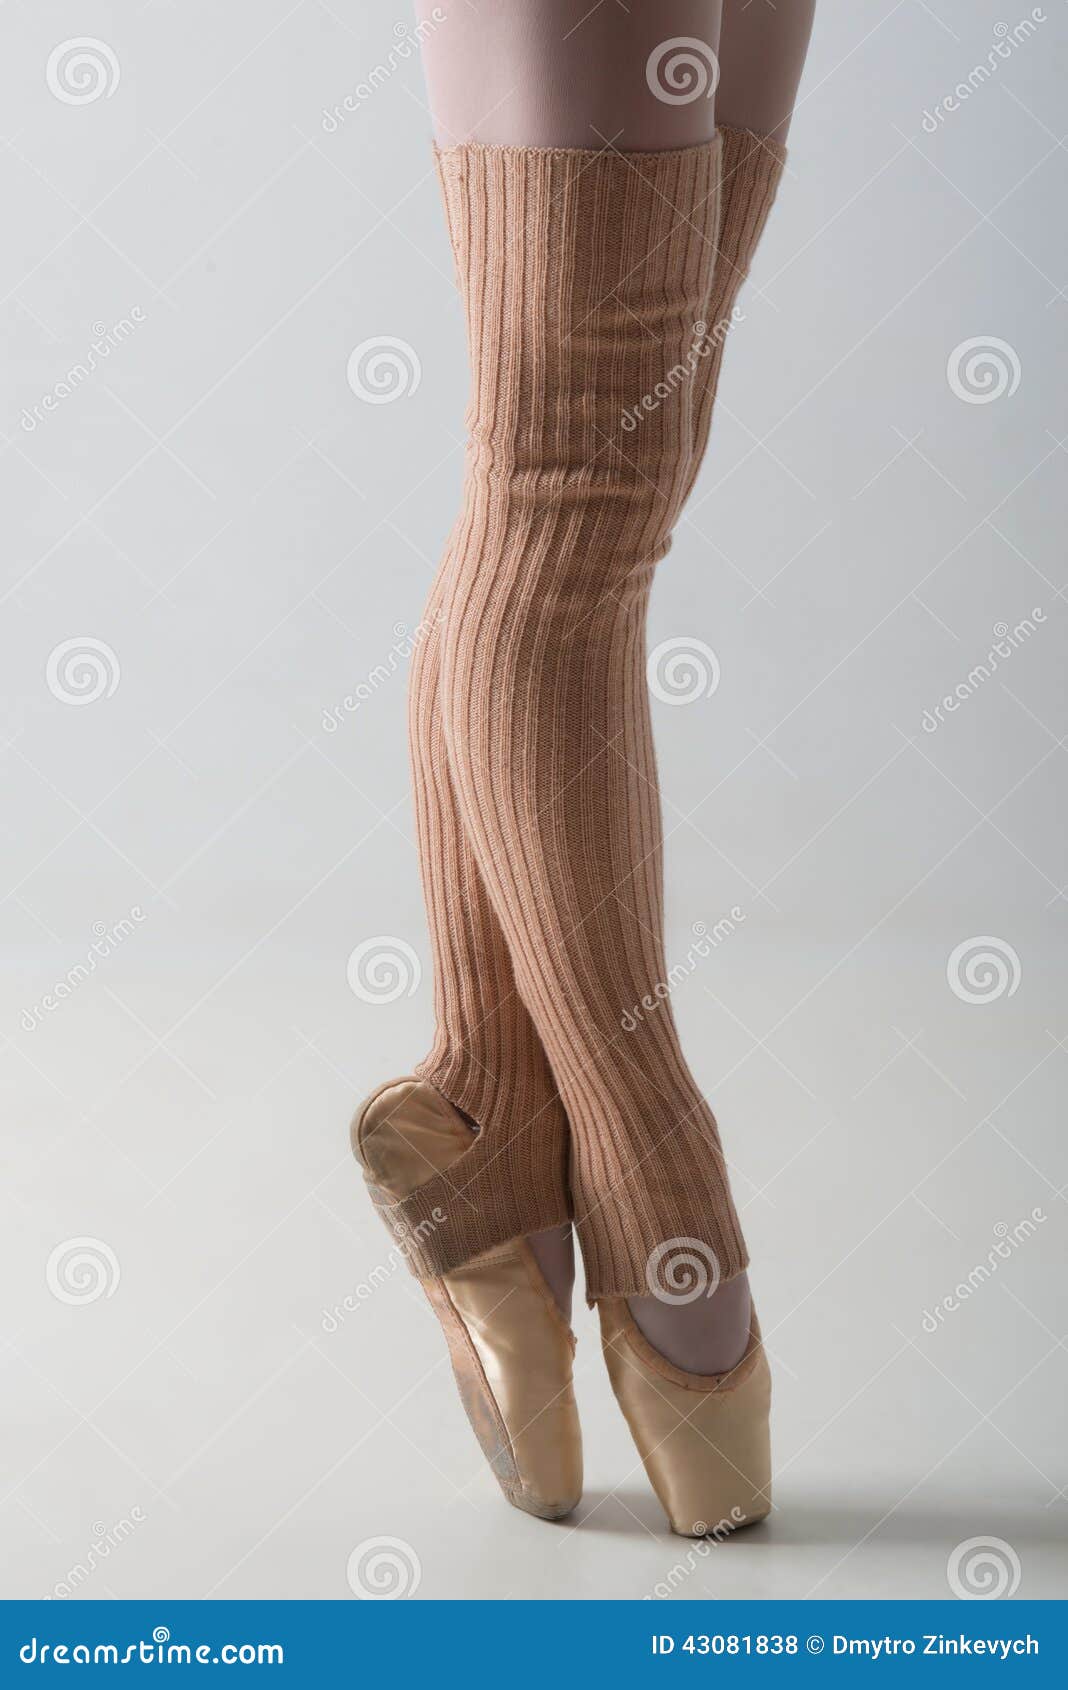 https://thumbs.dreamstime.com/z/closeup-ballet-shoes-dancing-pointe-portrait-dancer-legs-long-socks-isolated-white-background-43081838.jpg